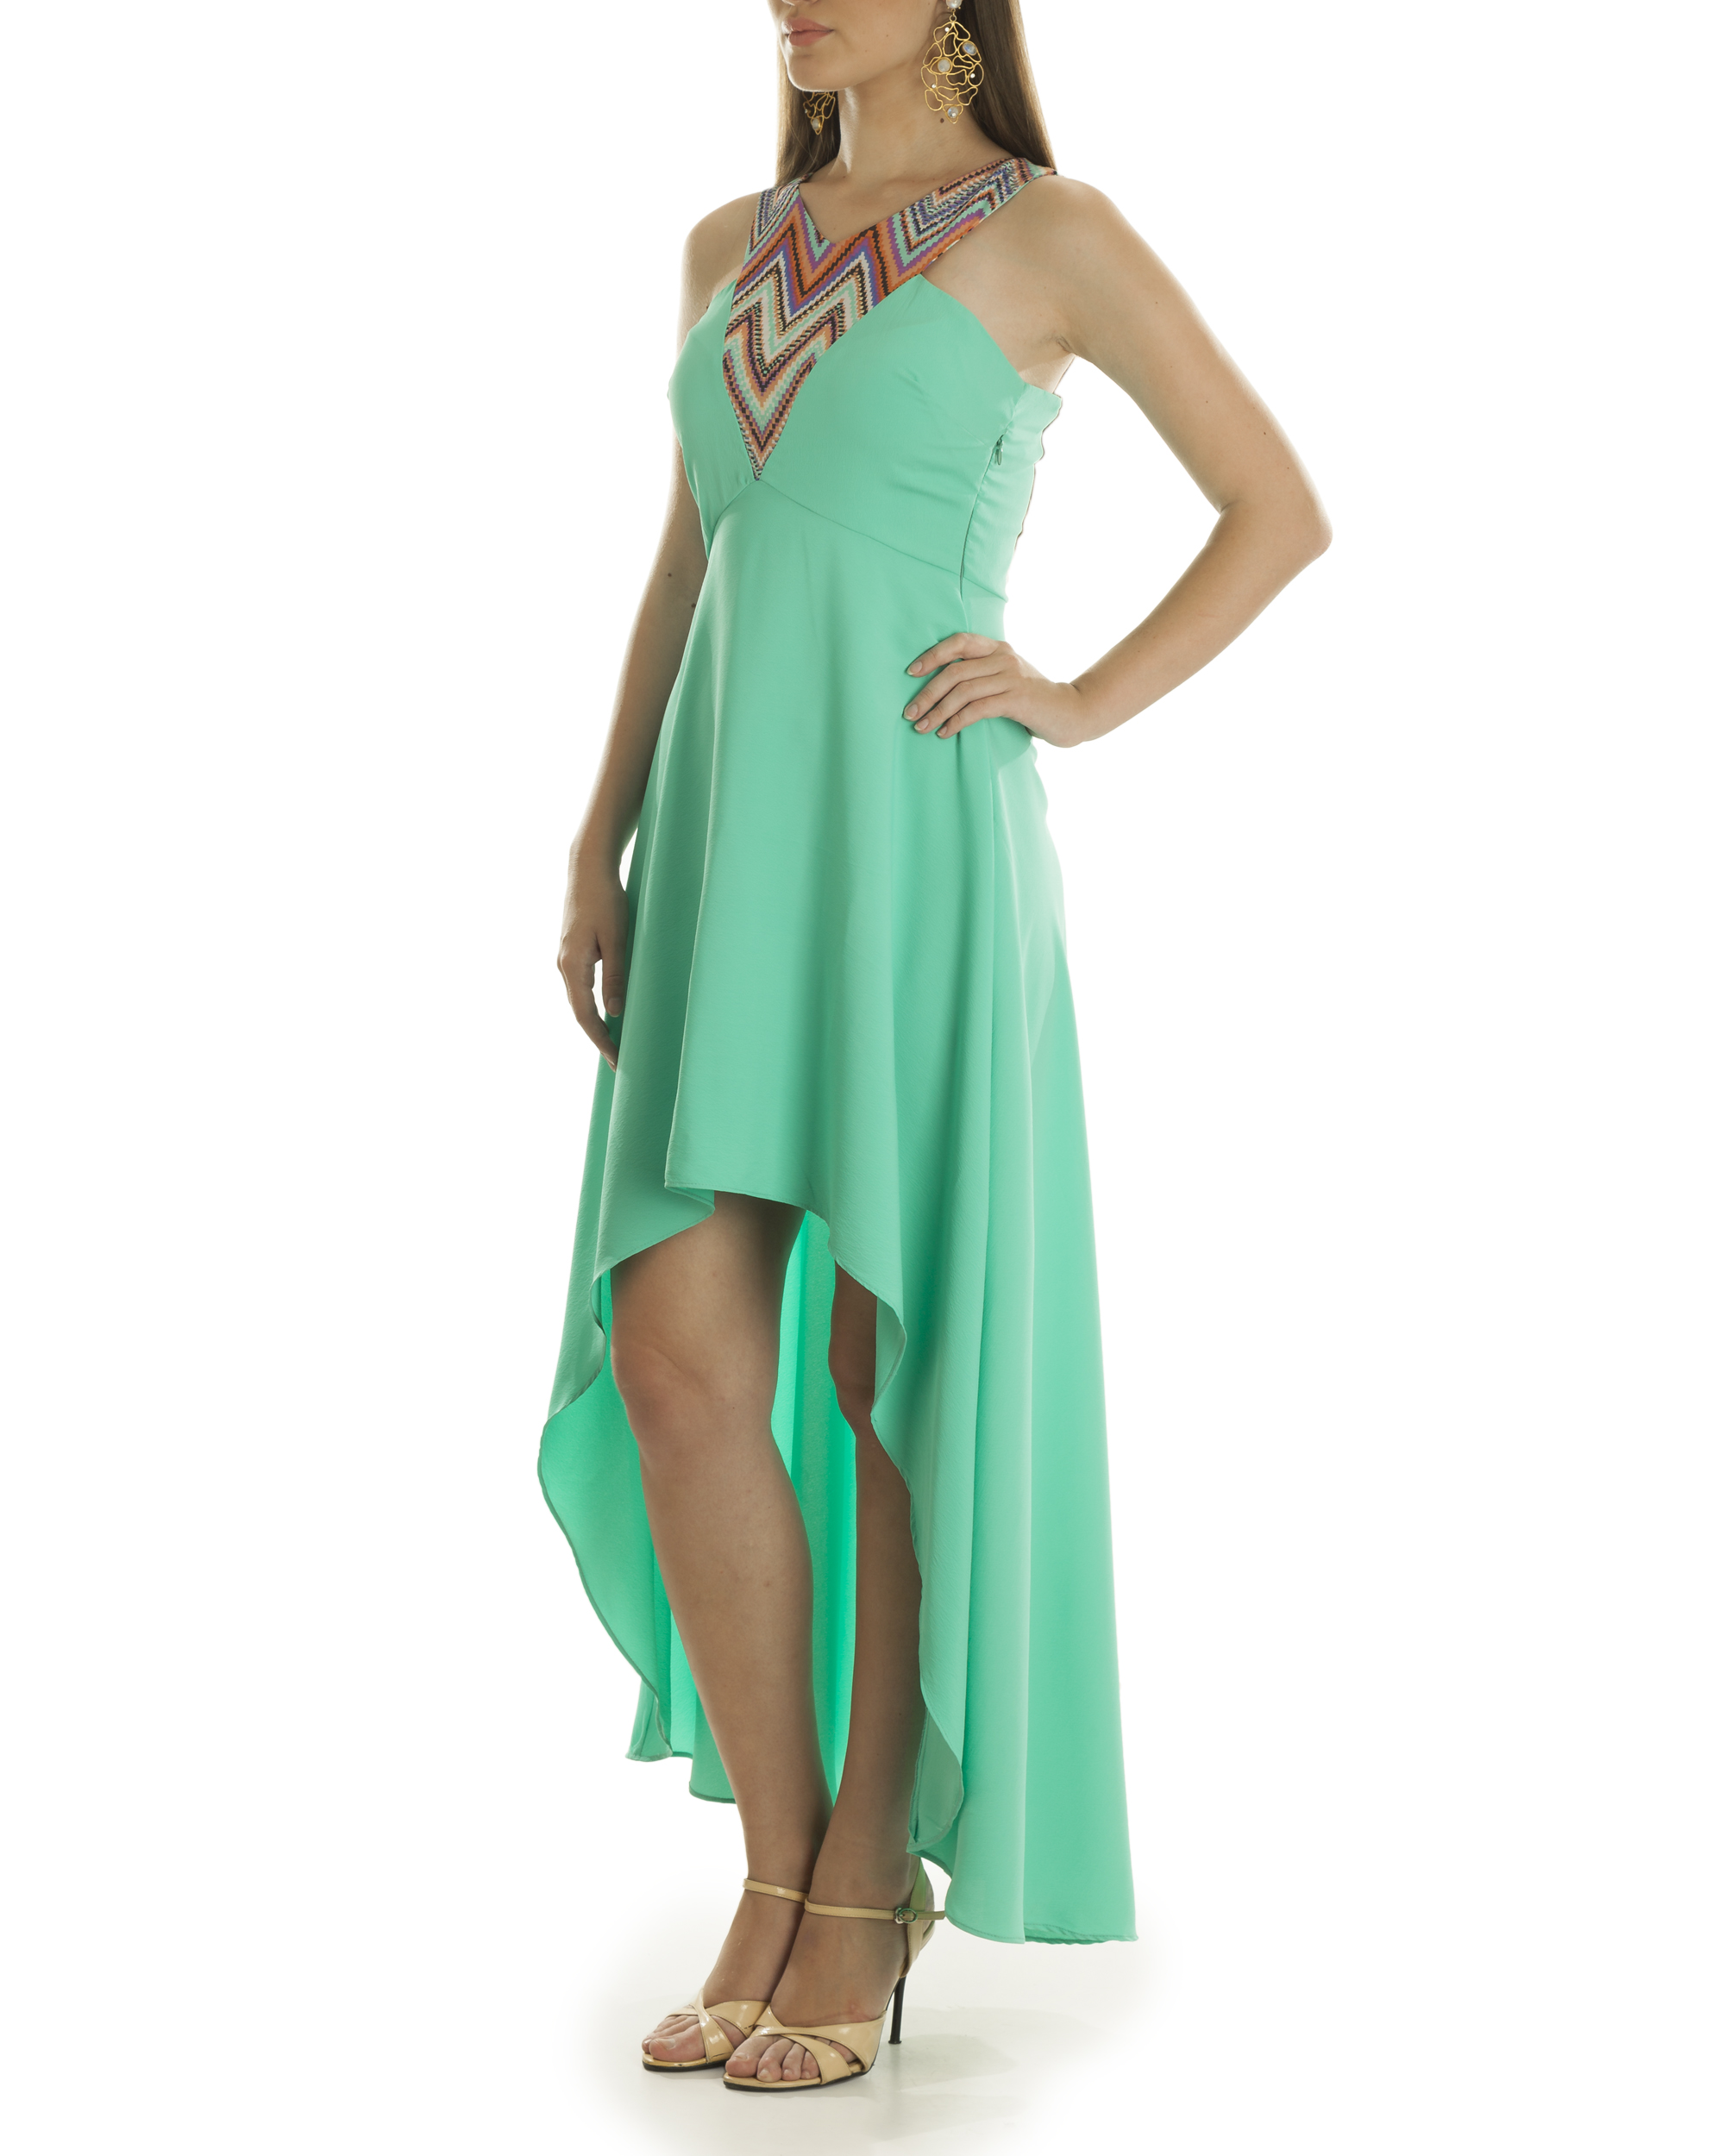 Liz hi low turquoise dress by Nay-Ked | The Secret Label